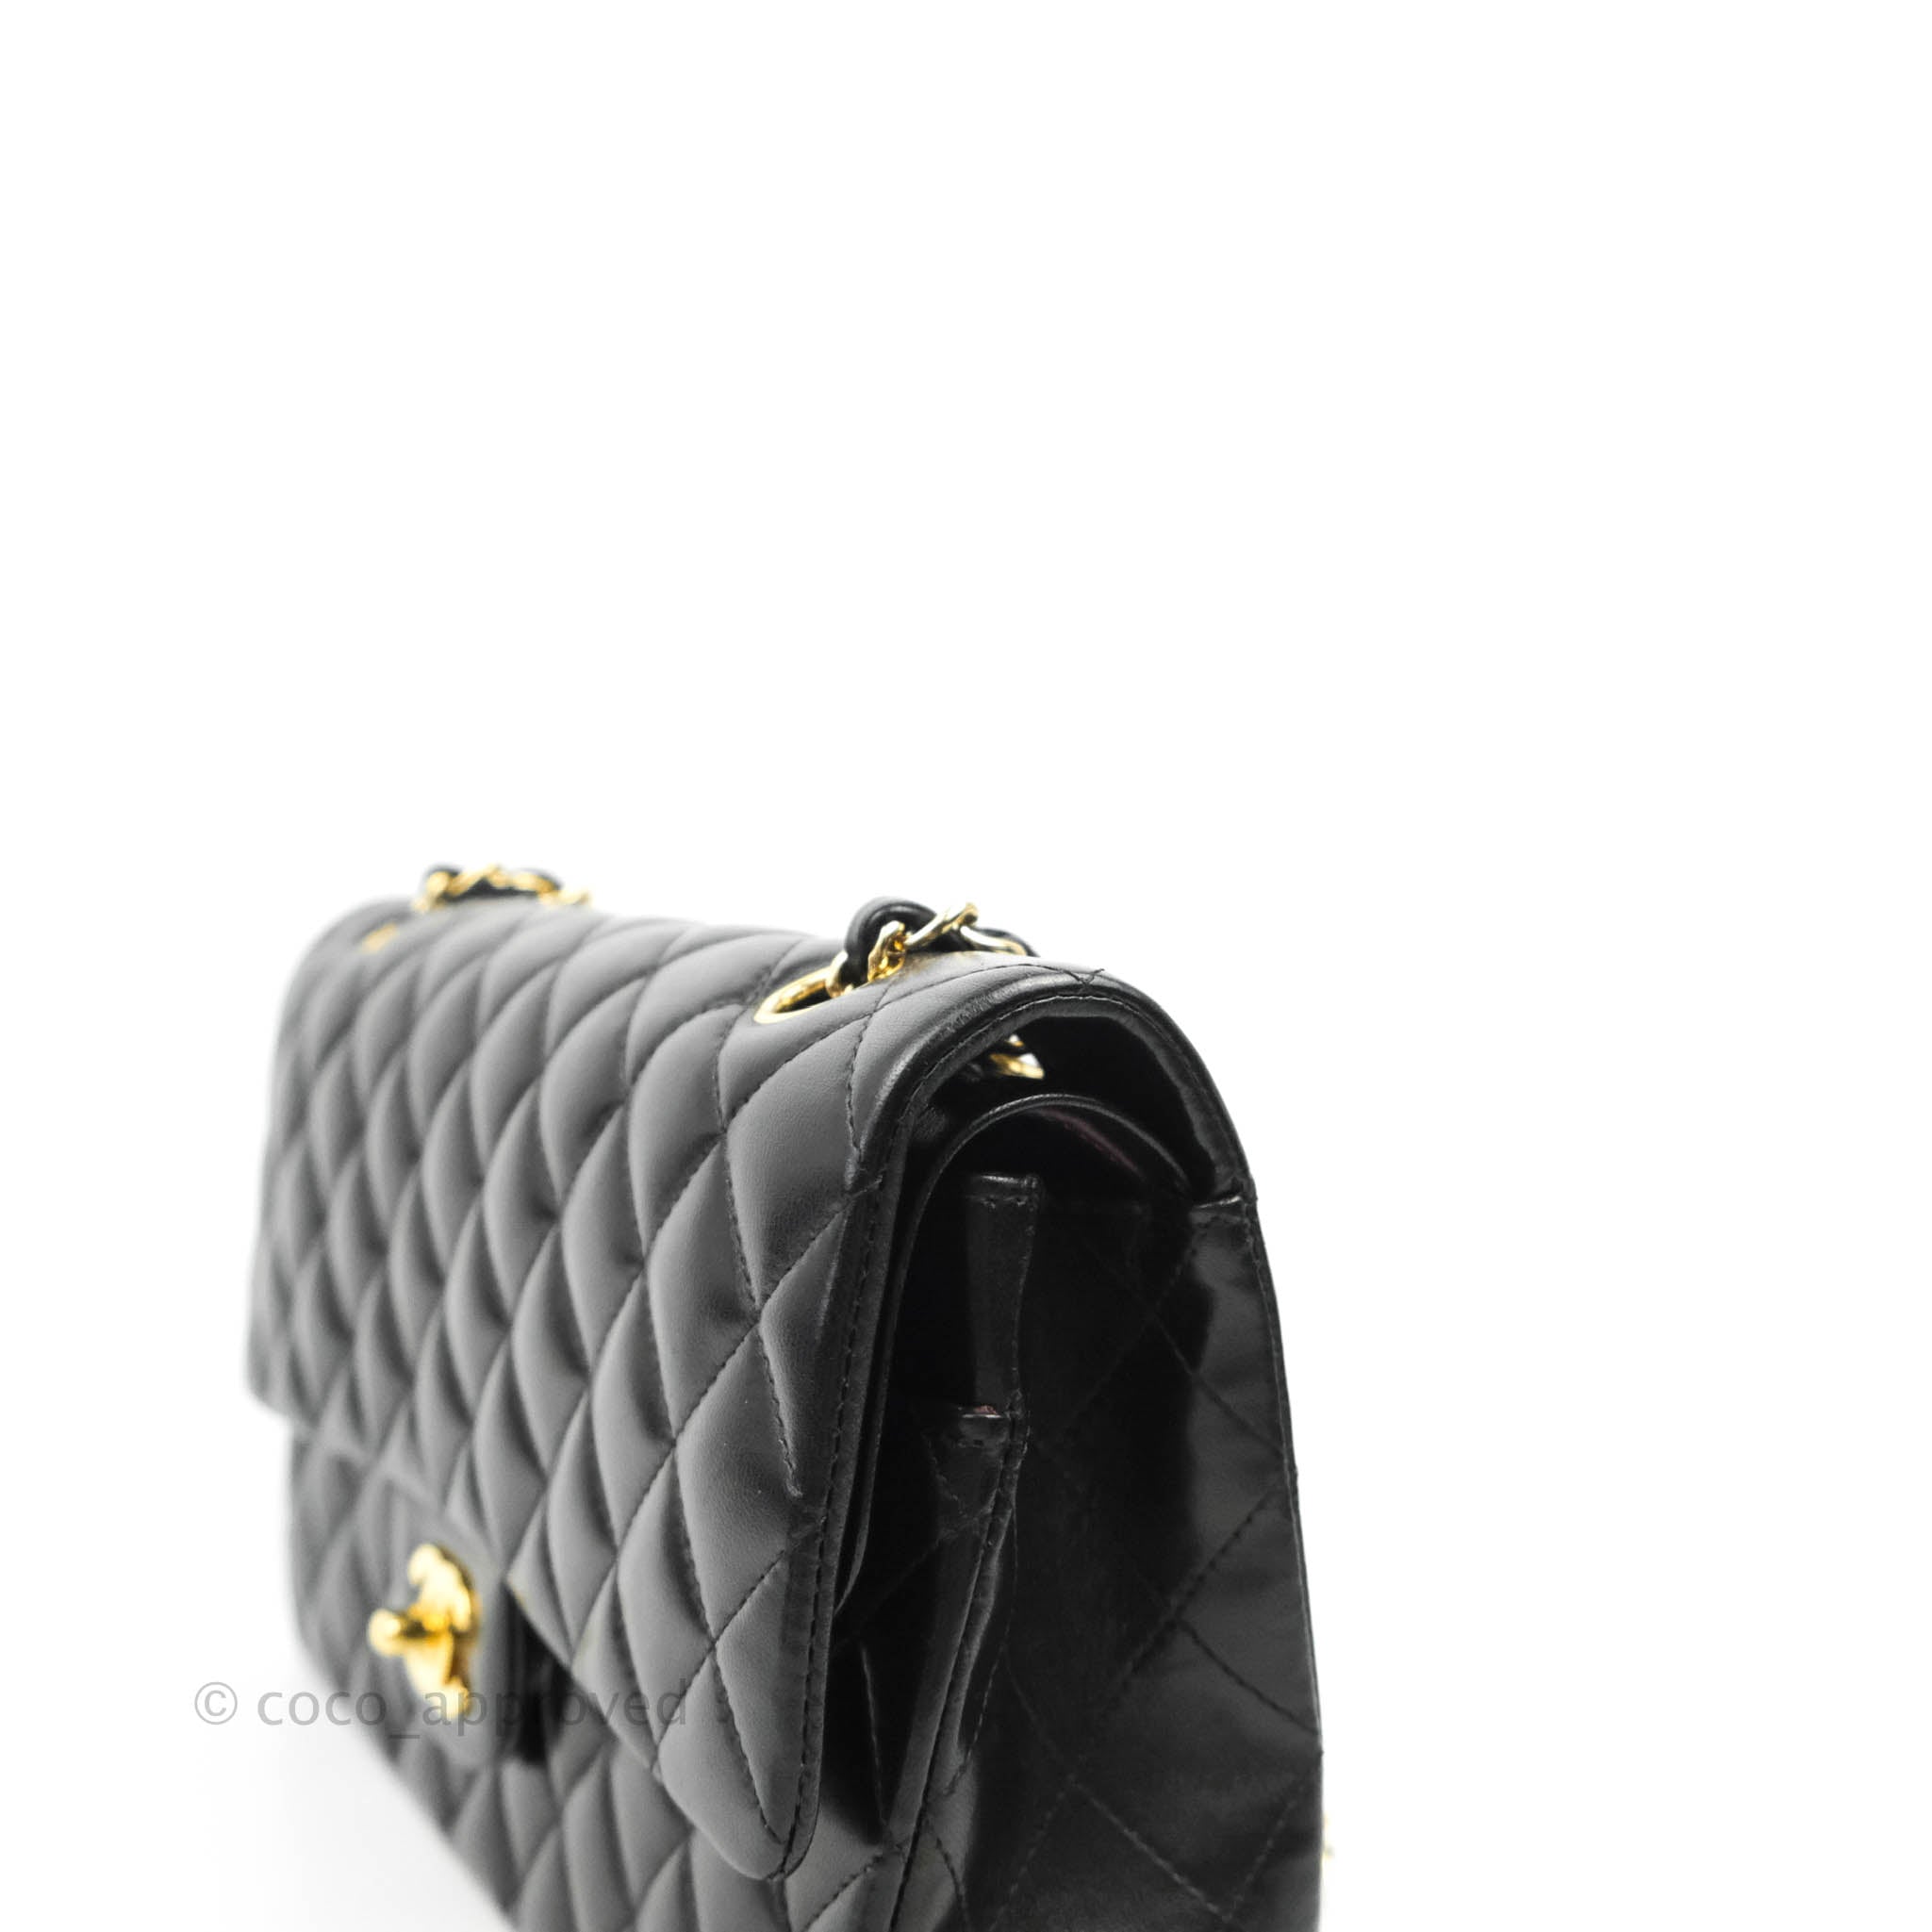 classic black chanel bag